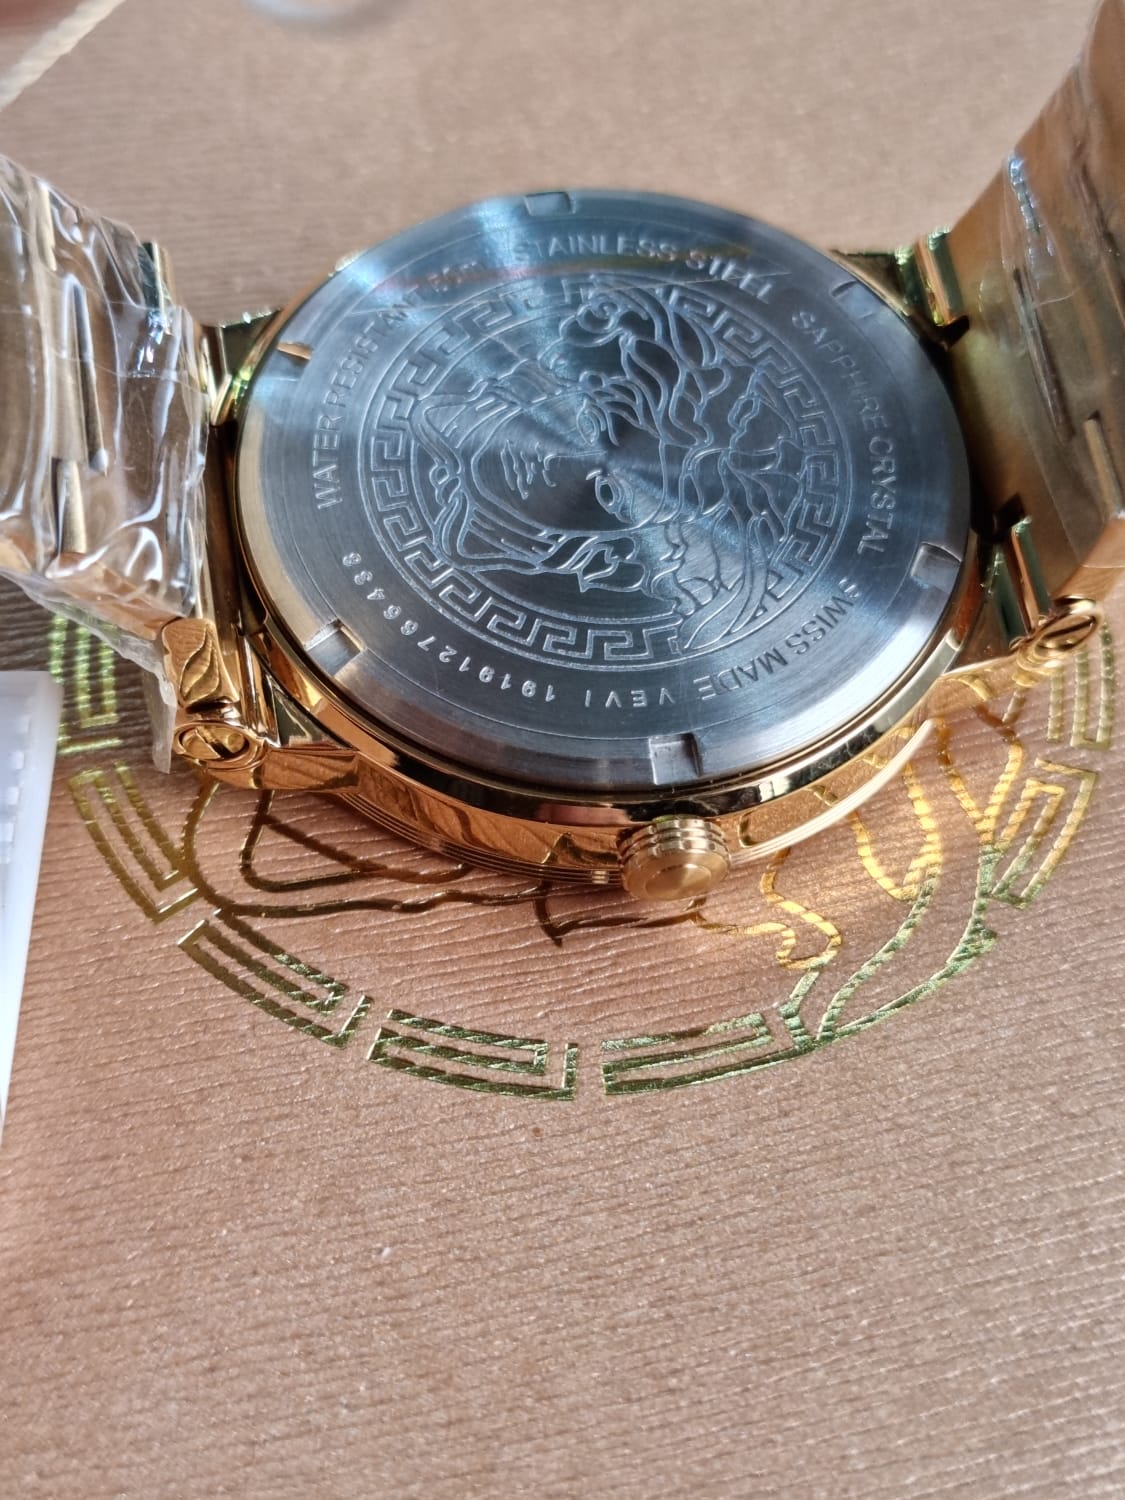 Versace Men’s Quartz Swiss Made Gold Stainless Steel Silver Dial 41mm Watch VEVI00520